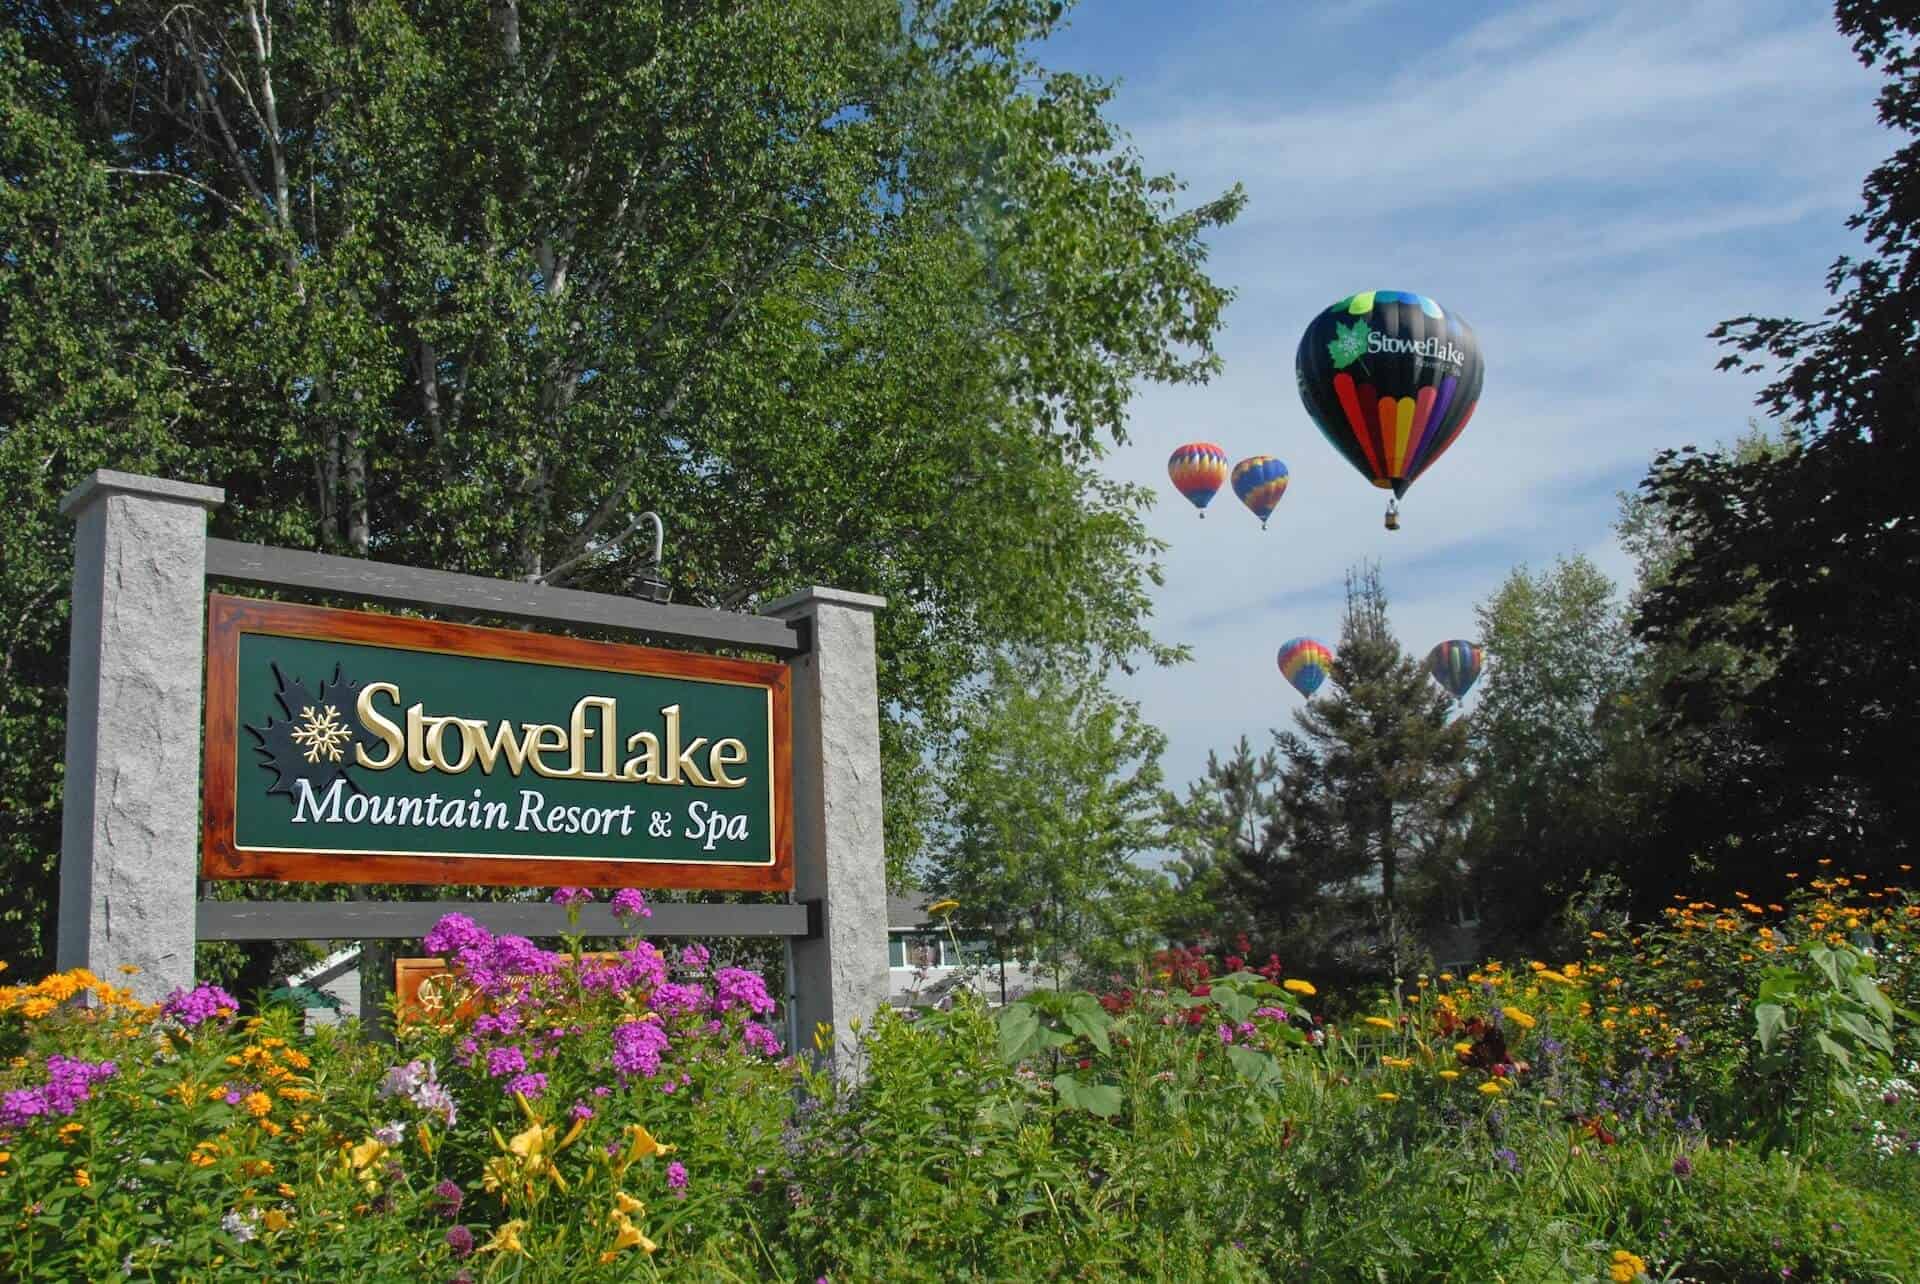 Stoweflake Mountainn Resort and Spa - Summer Sign and Balloons